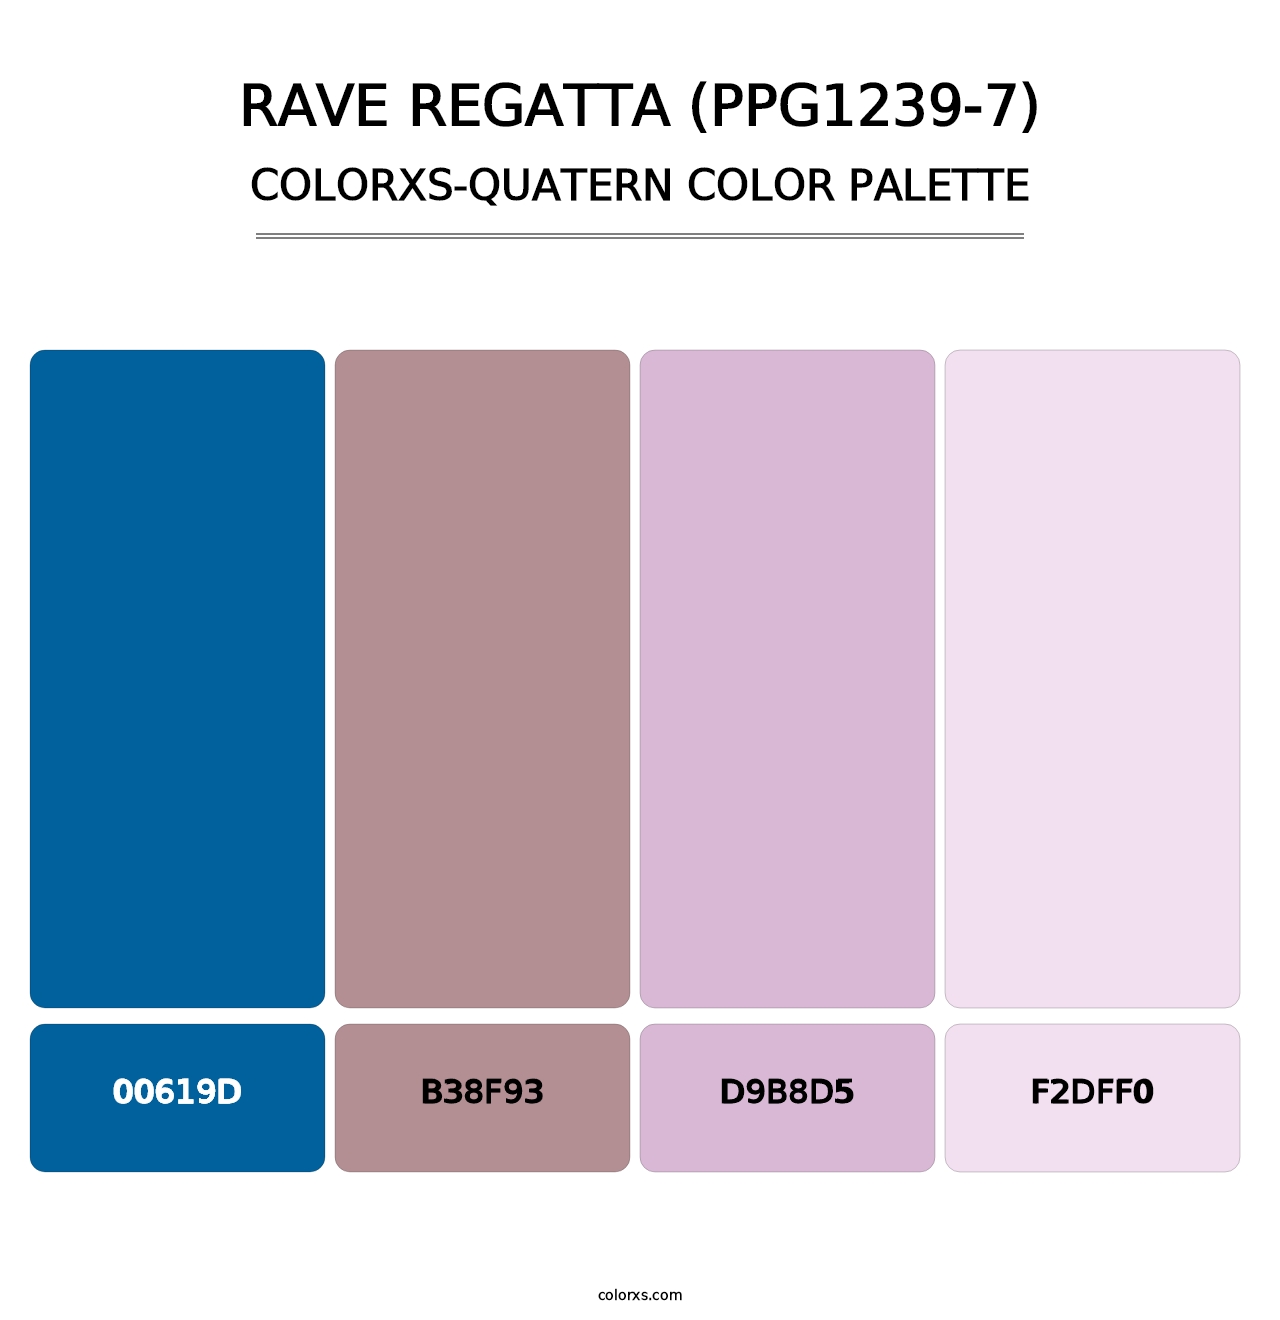 Rave Regatta (PPG1239-7) - Colorxs Quatern Palette